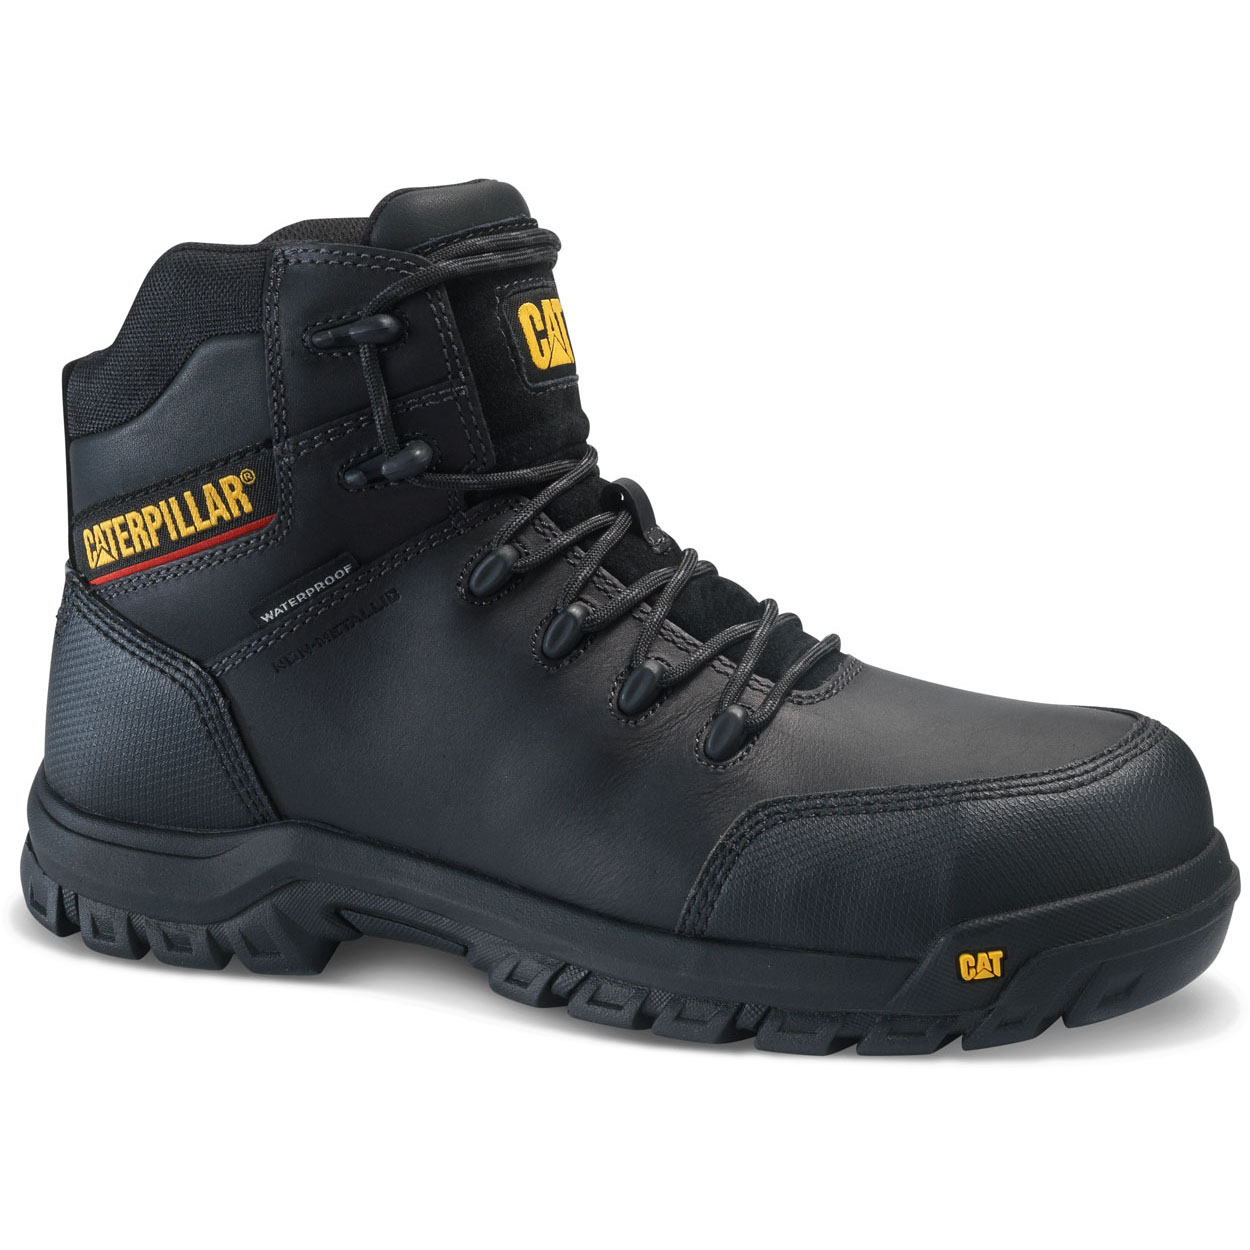 Caterpillar Safety Boots Online UAE - Caterpillar Resorption Mens - Black IJZGOY692